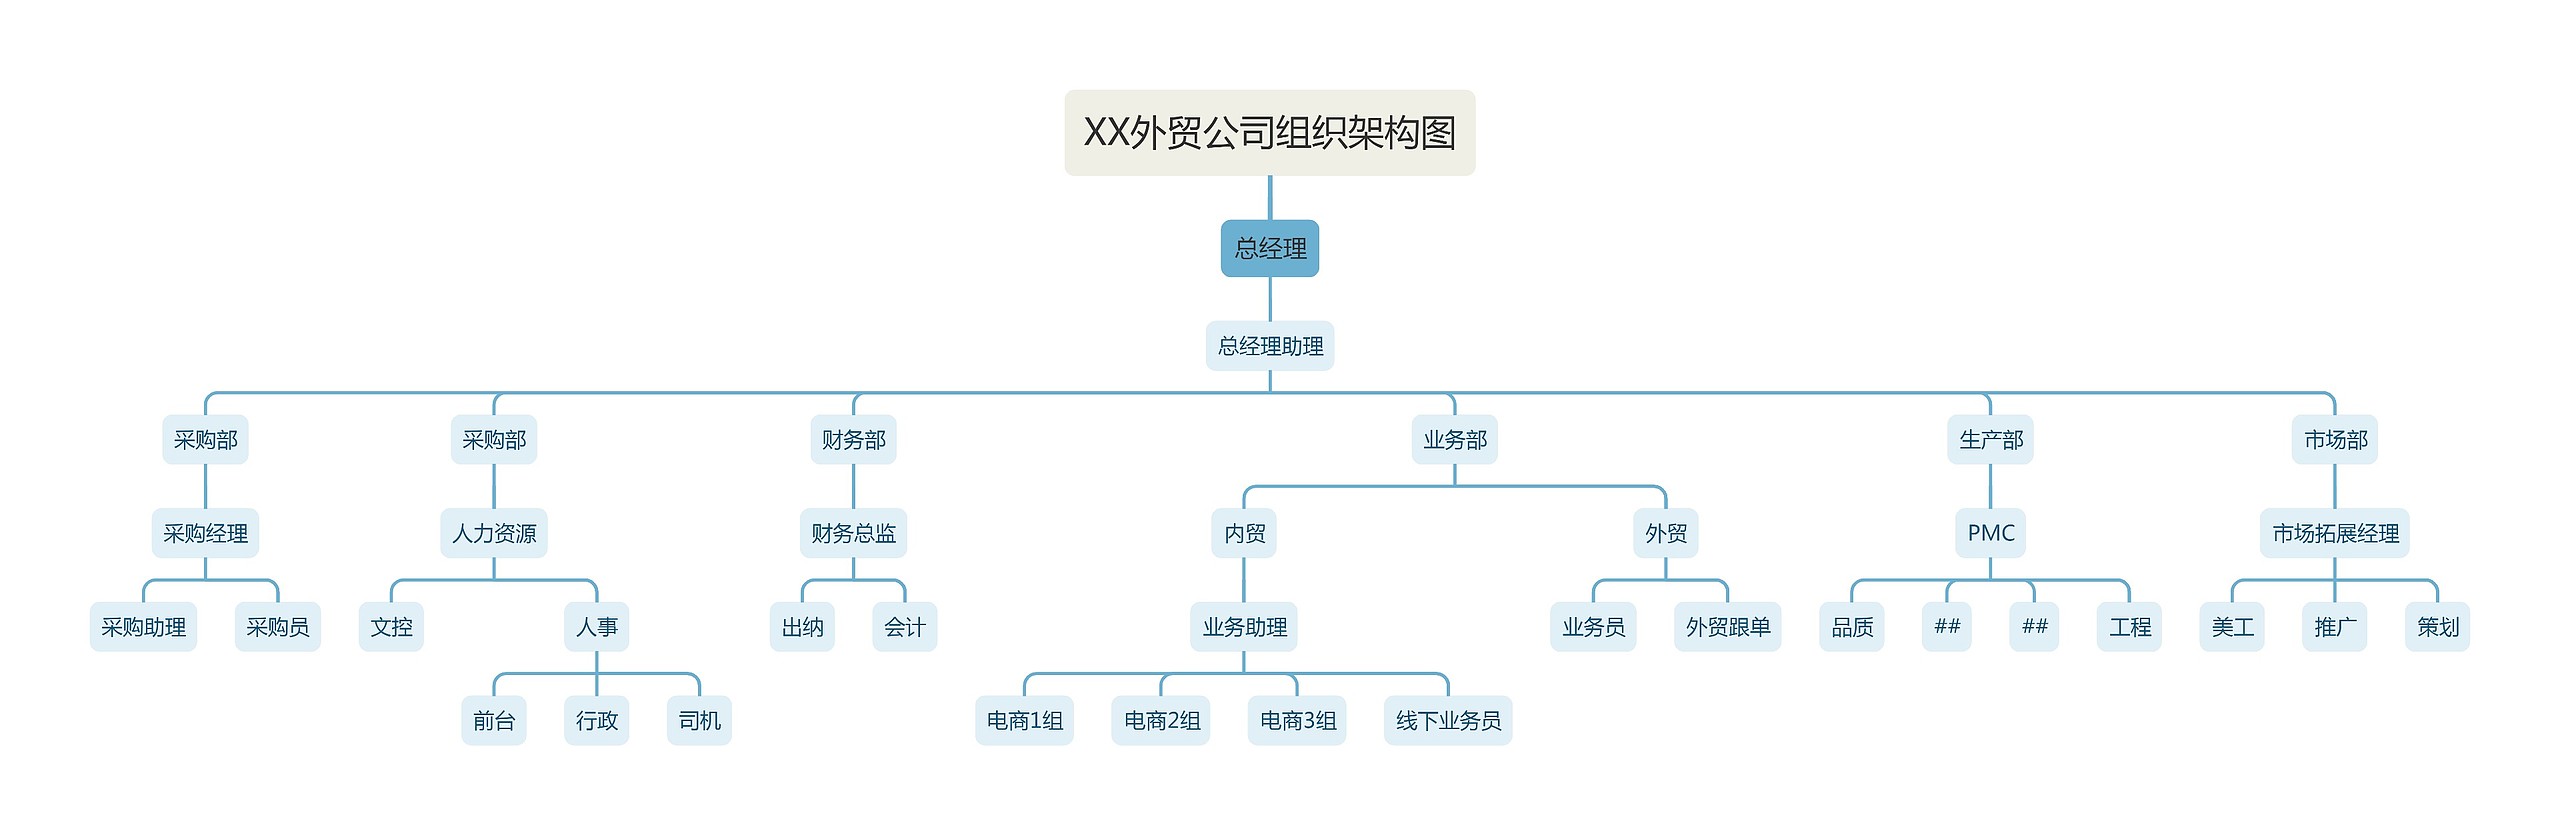 XX外贸公司组织架构图